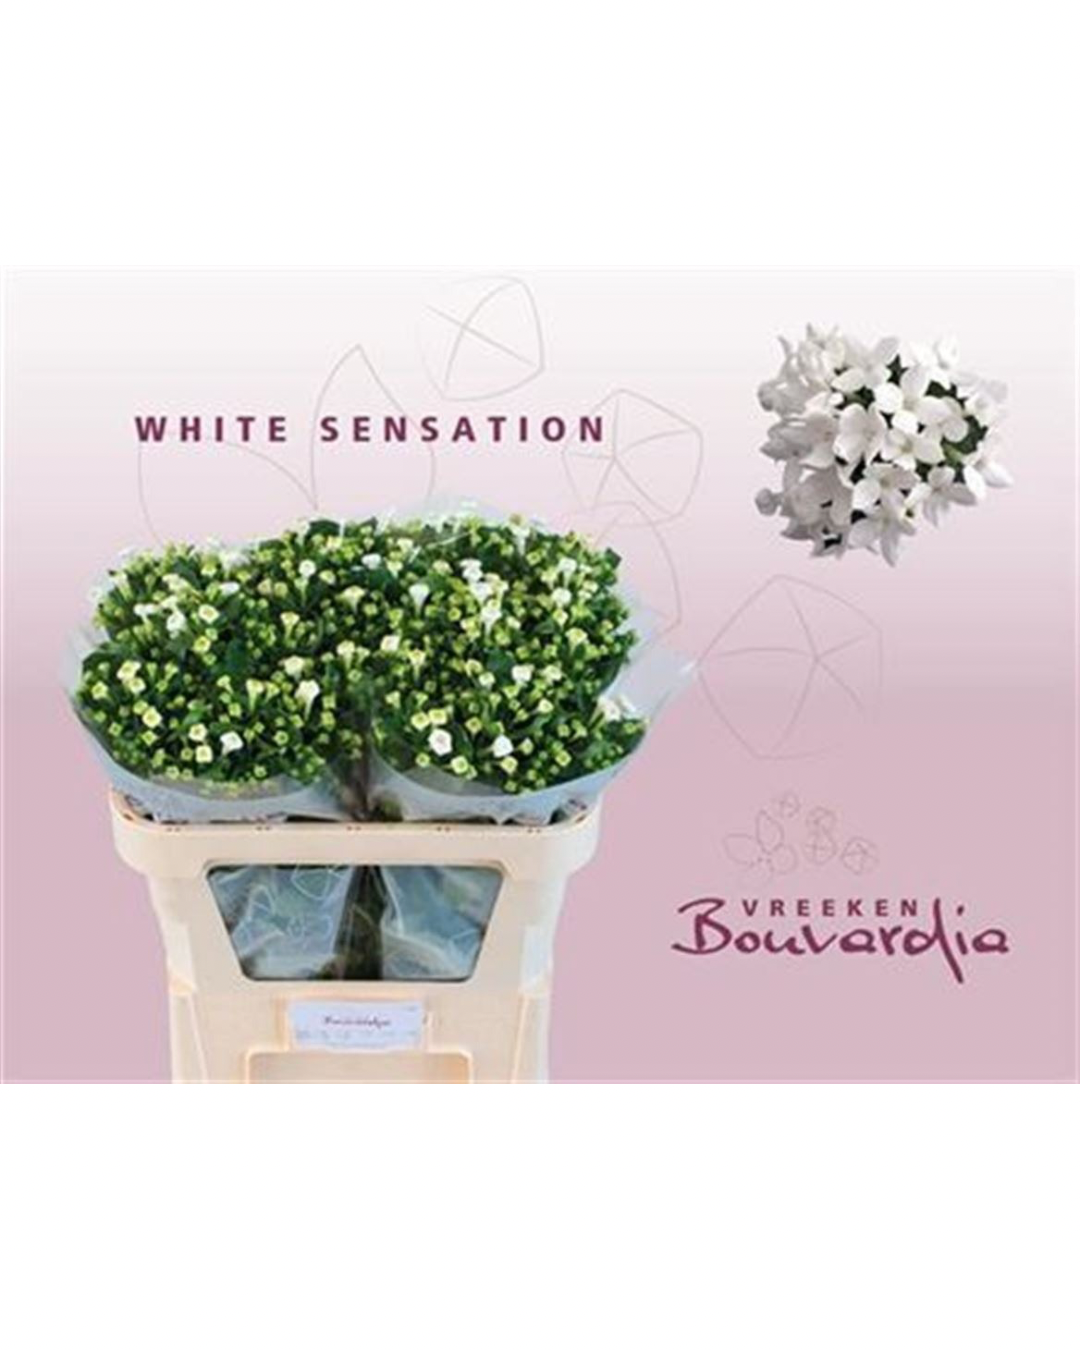 Bouvardia White Sensation